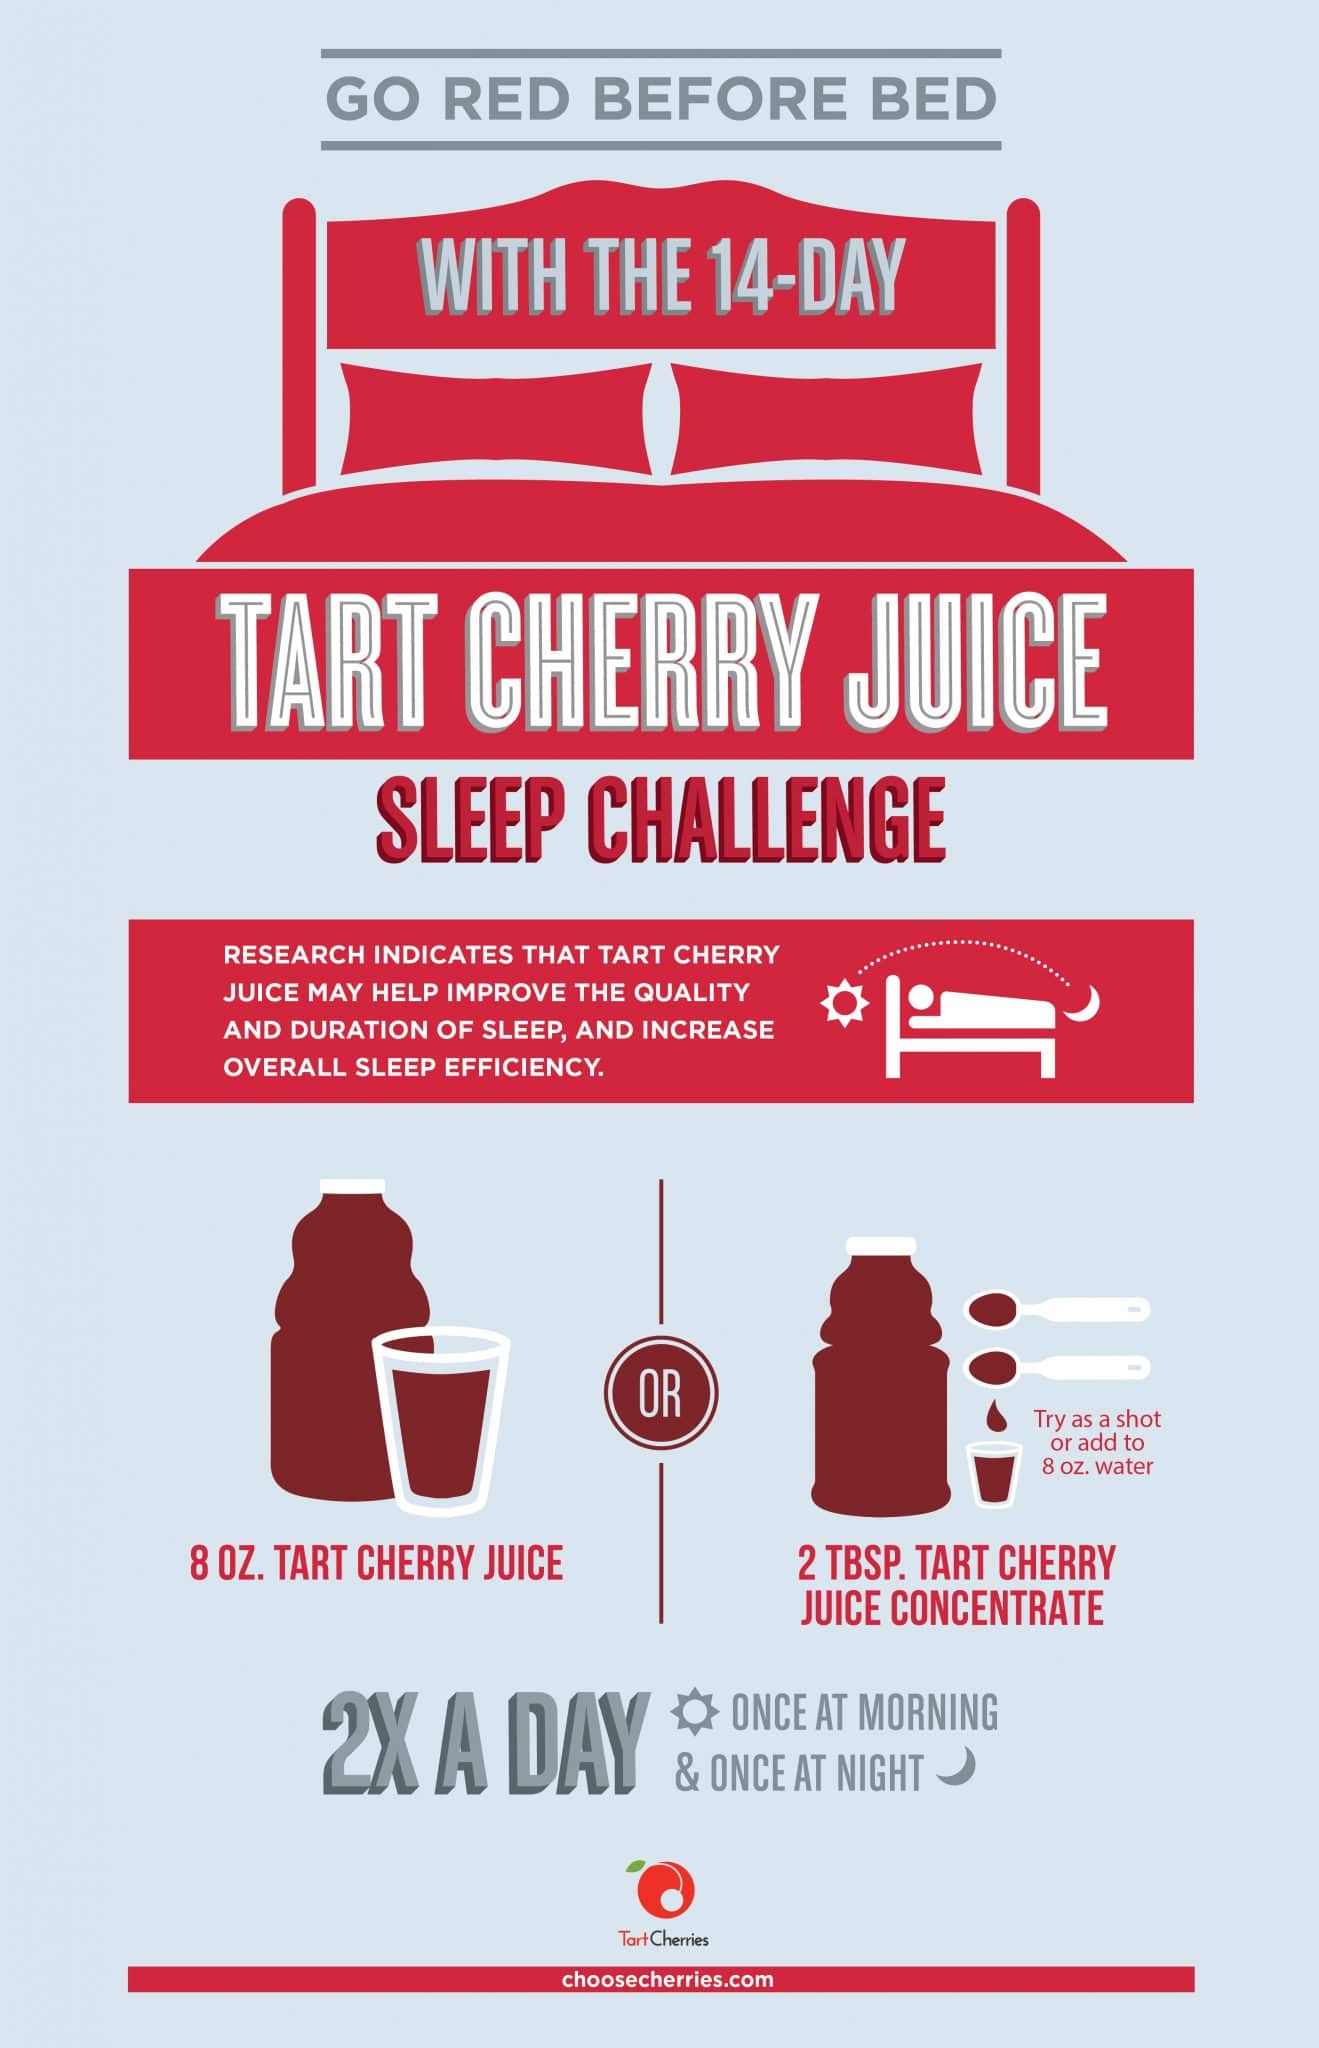 The 14-day Tart Cherry Juice Challenge